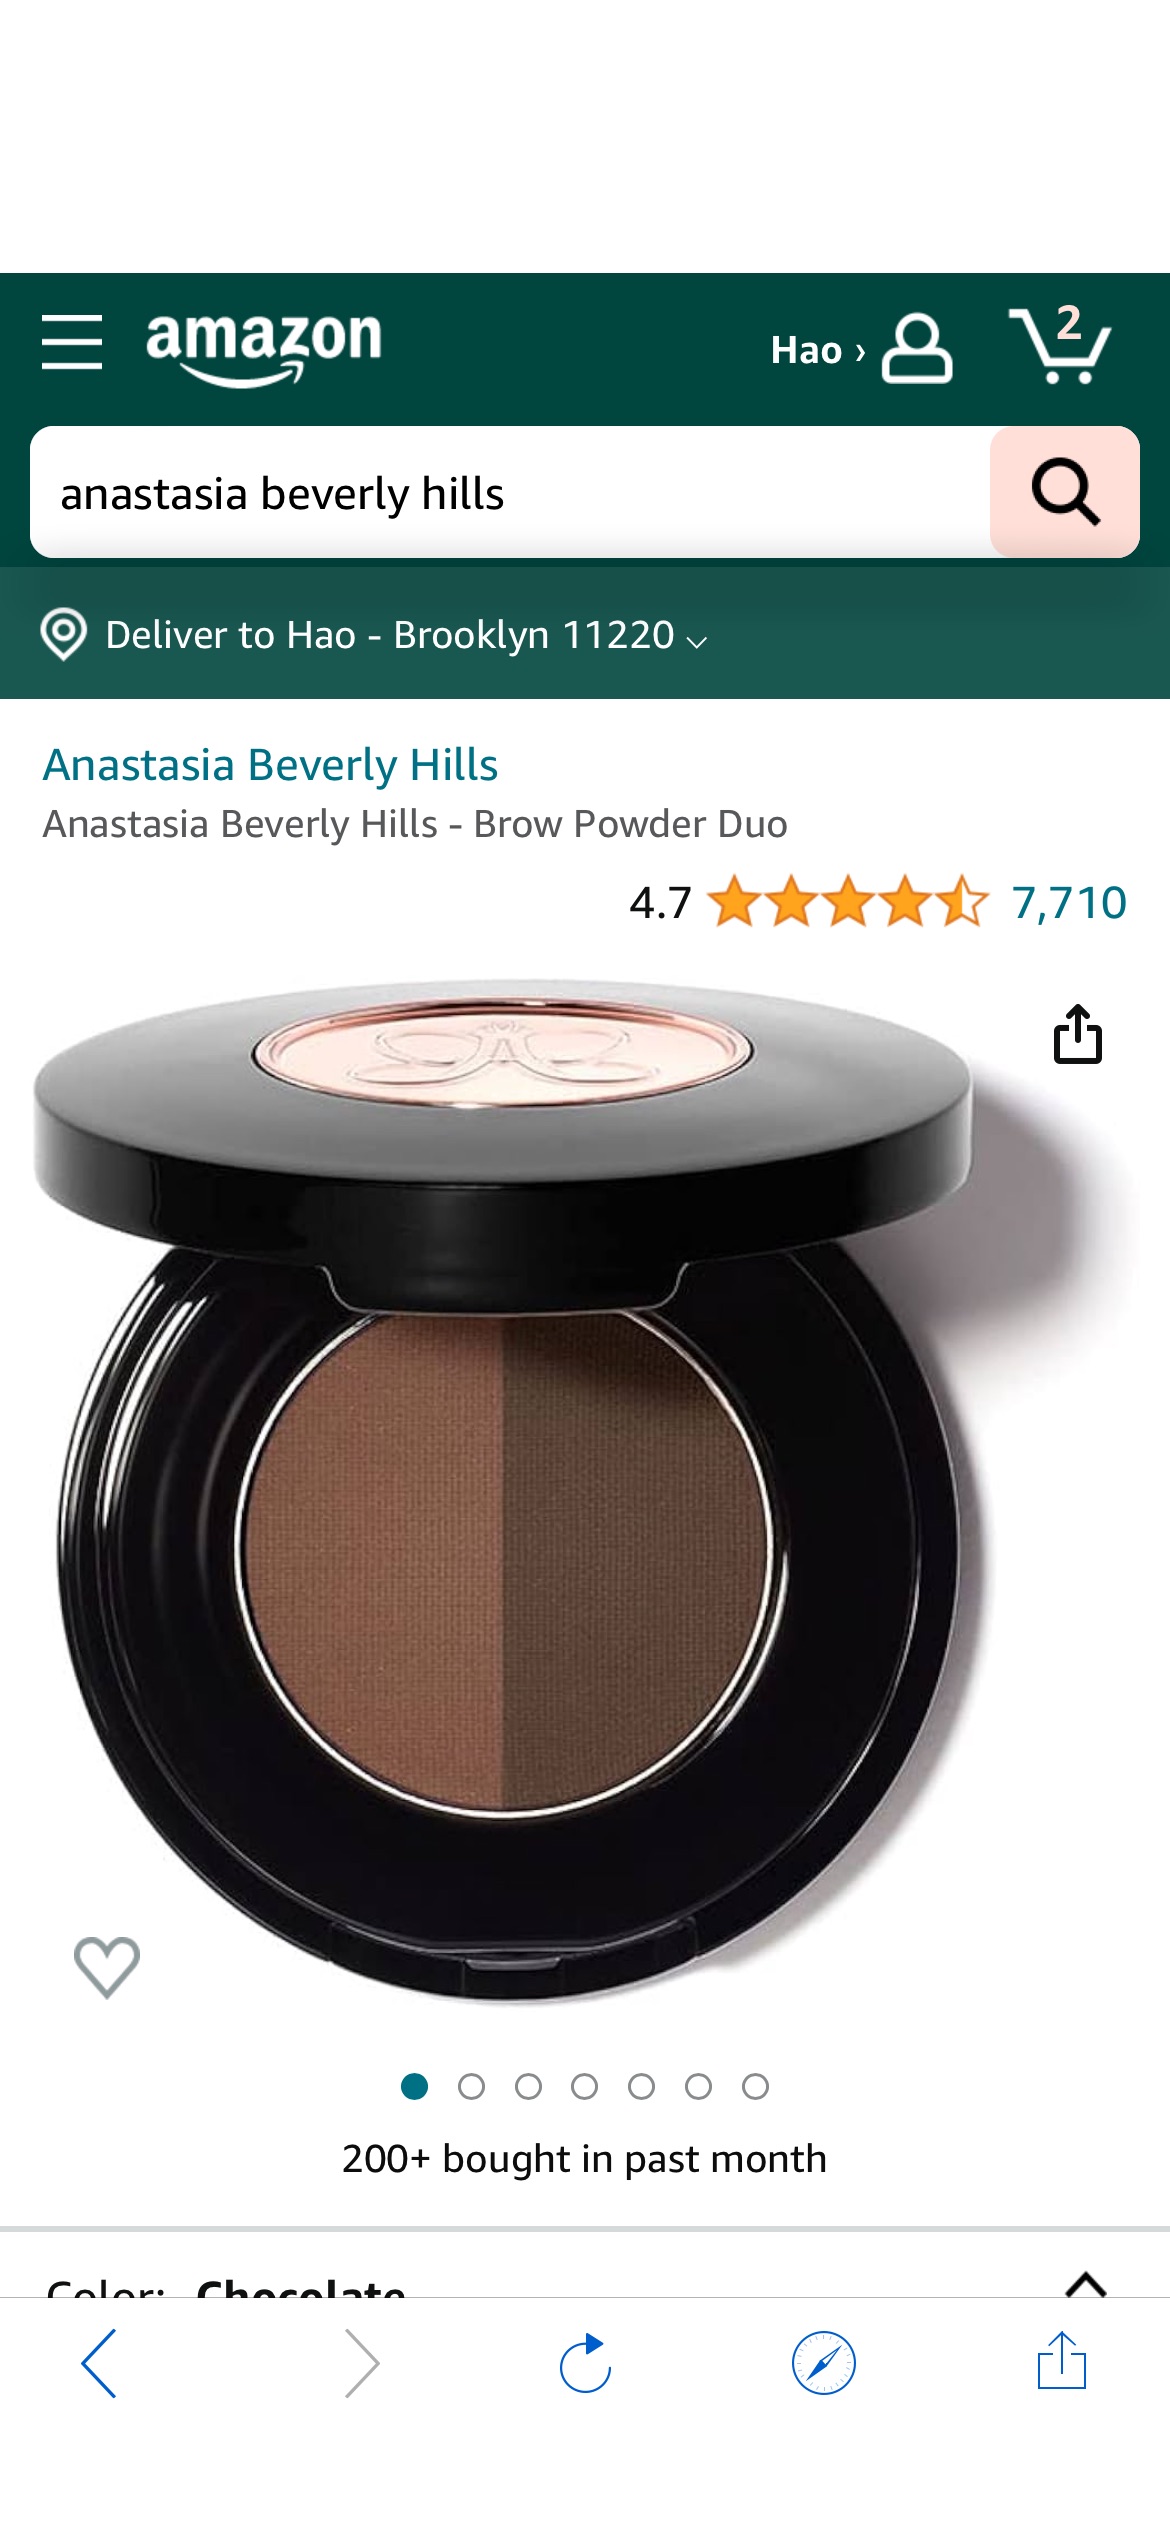 Amazon.com: Anastasia Beverly Hills - Brow Powder Duo - Chocolate : Beauty & Personal Care